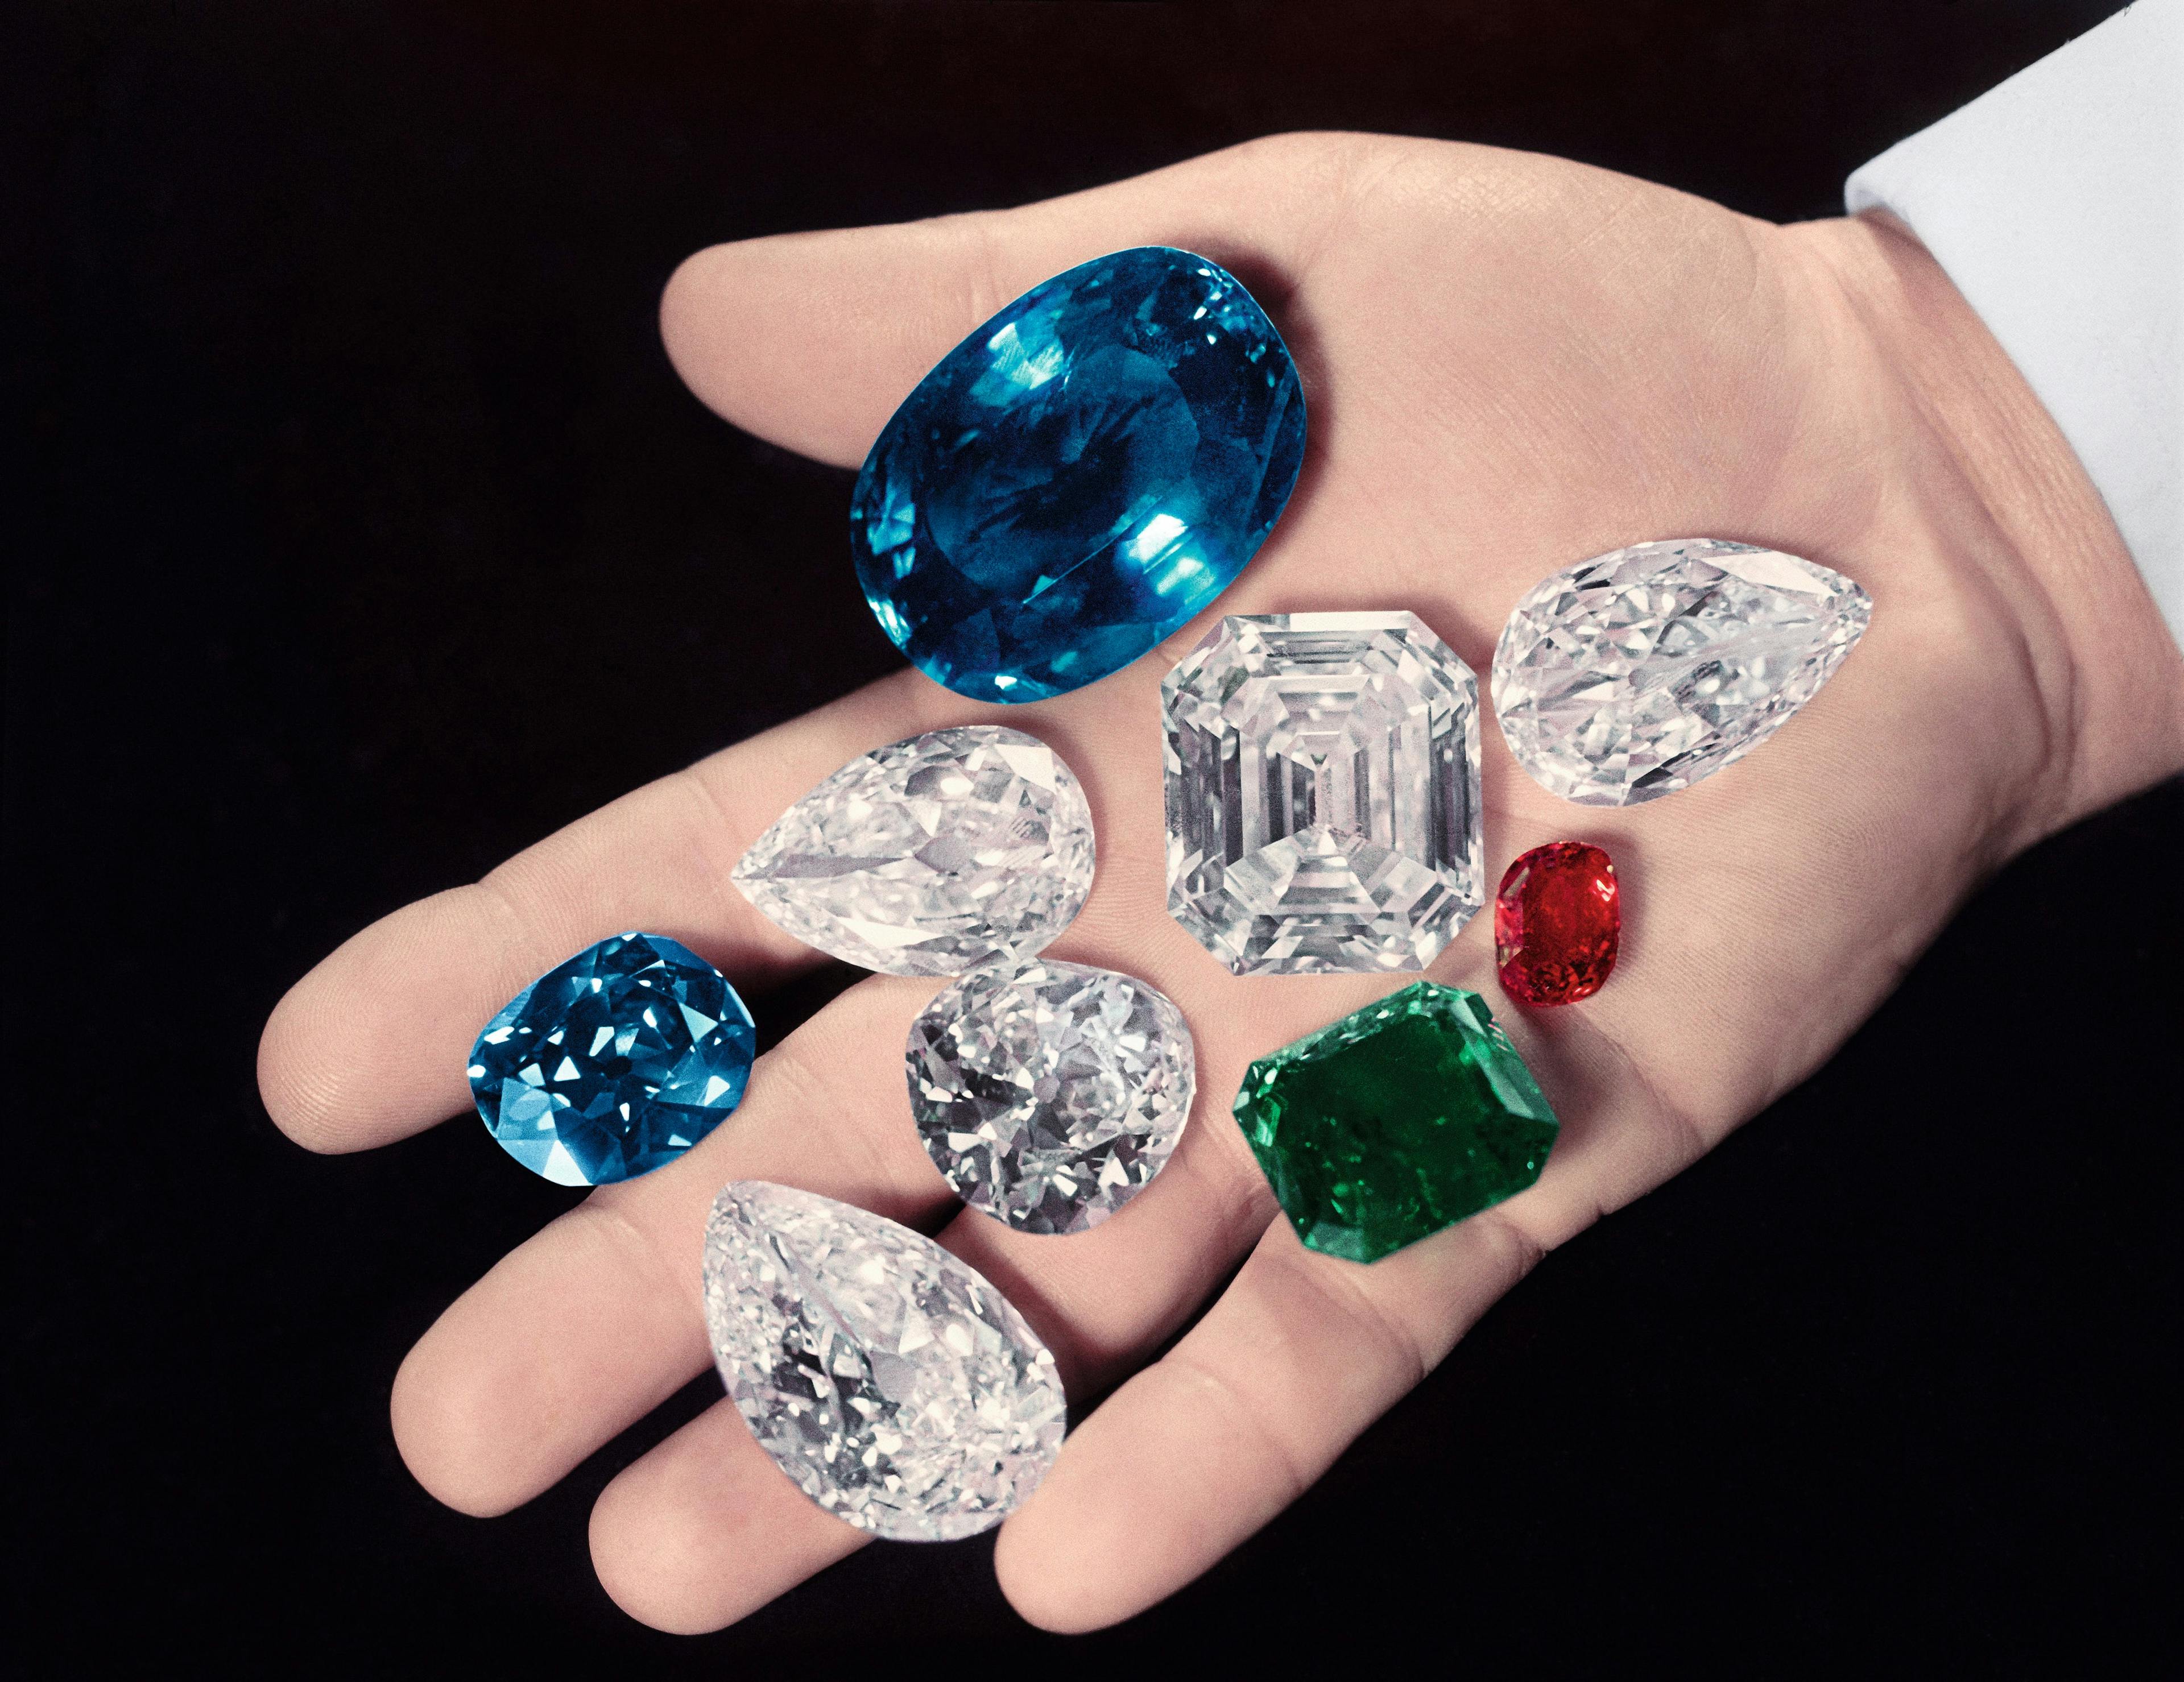 jewels diamonds emeralds rubies sapphires timeincown new york ny accessories gemstone jewelry diamond crystal person